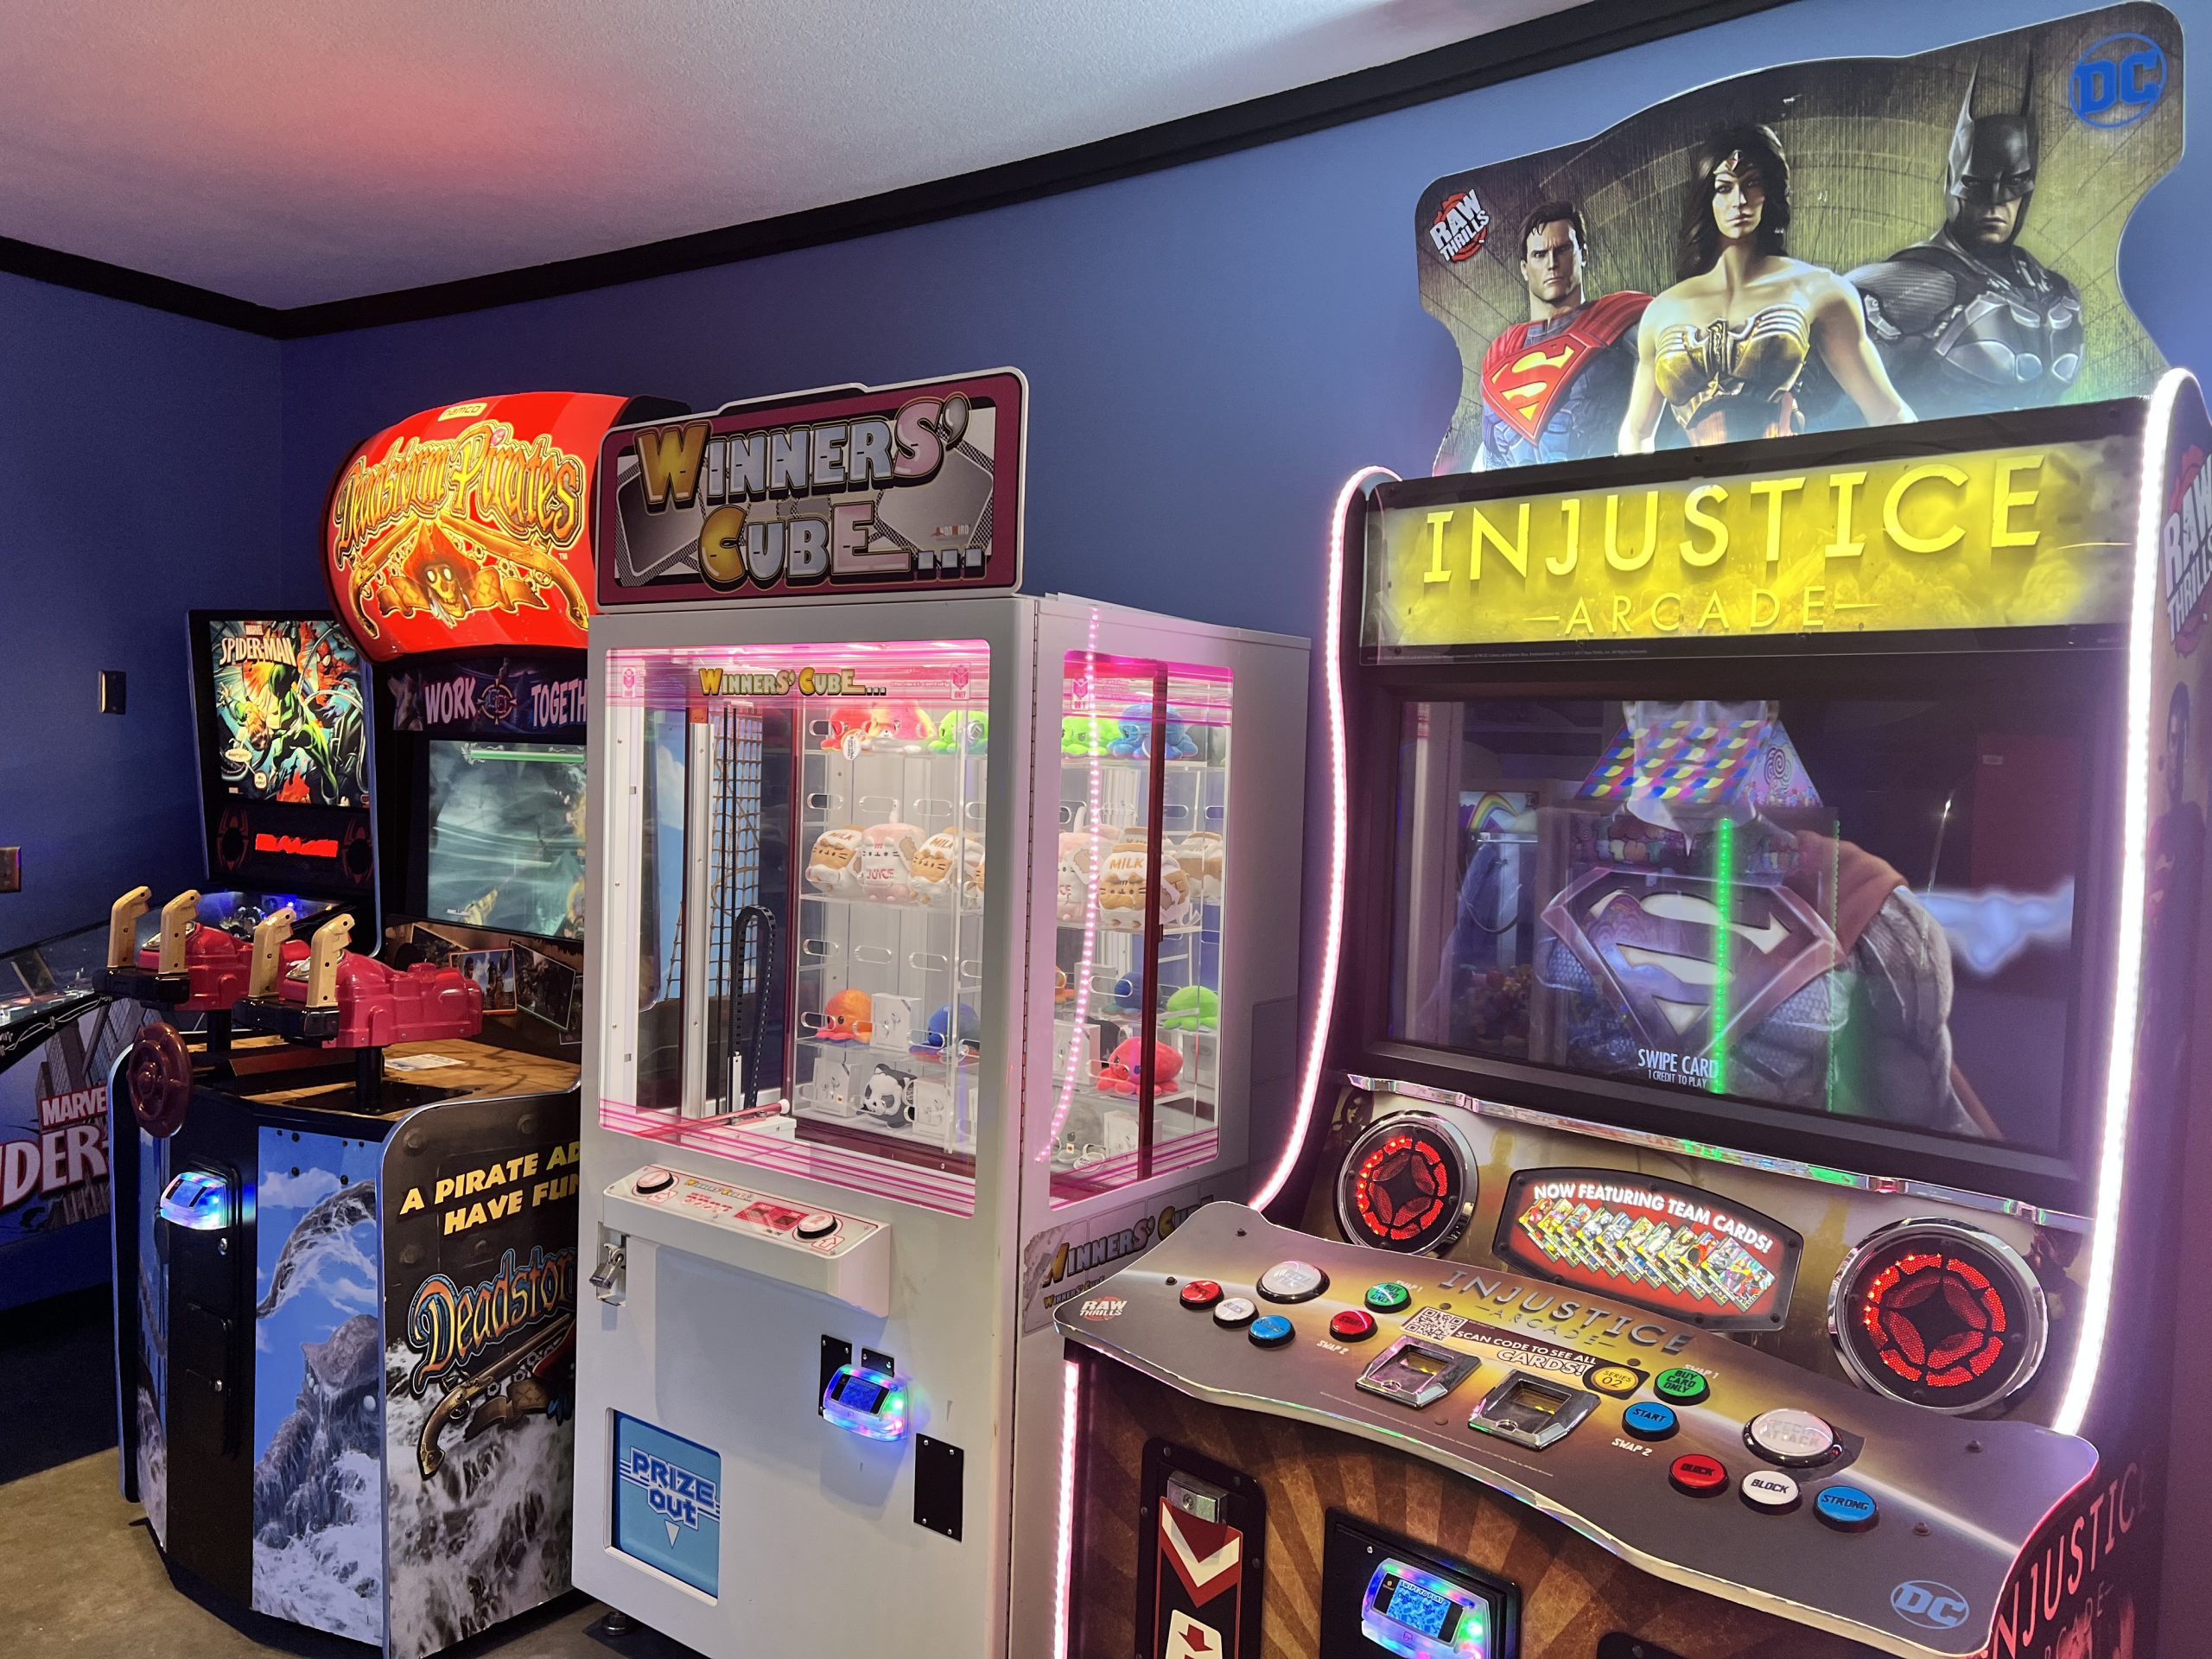 New Arcade area opens in MIB Gear Shop at Universal Studios Florida Inside Universal